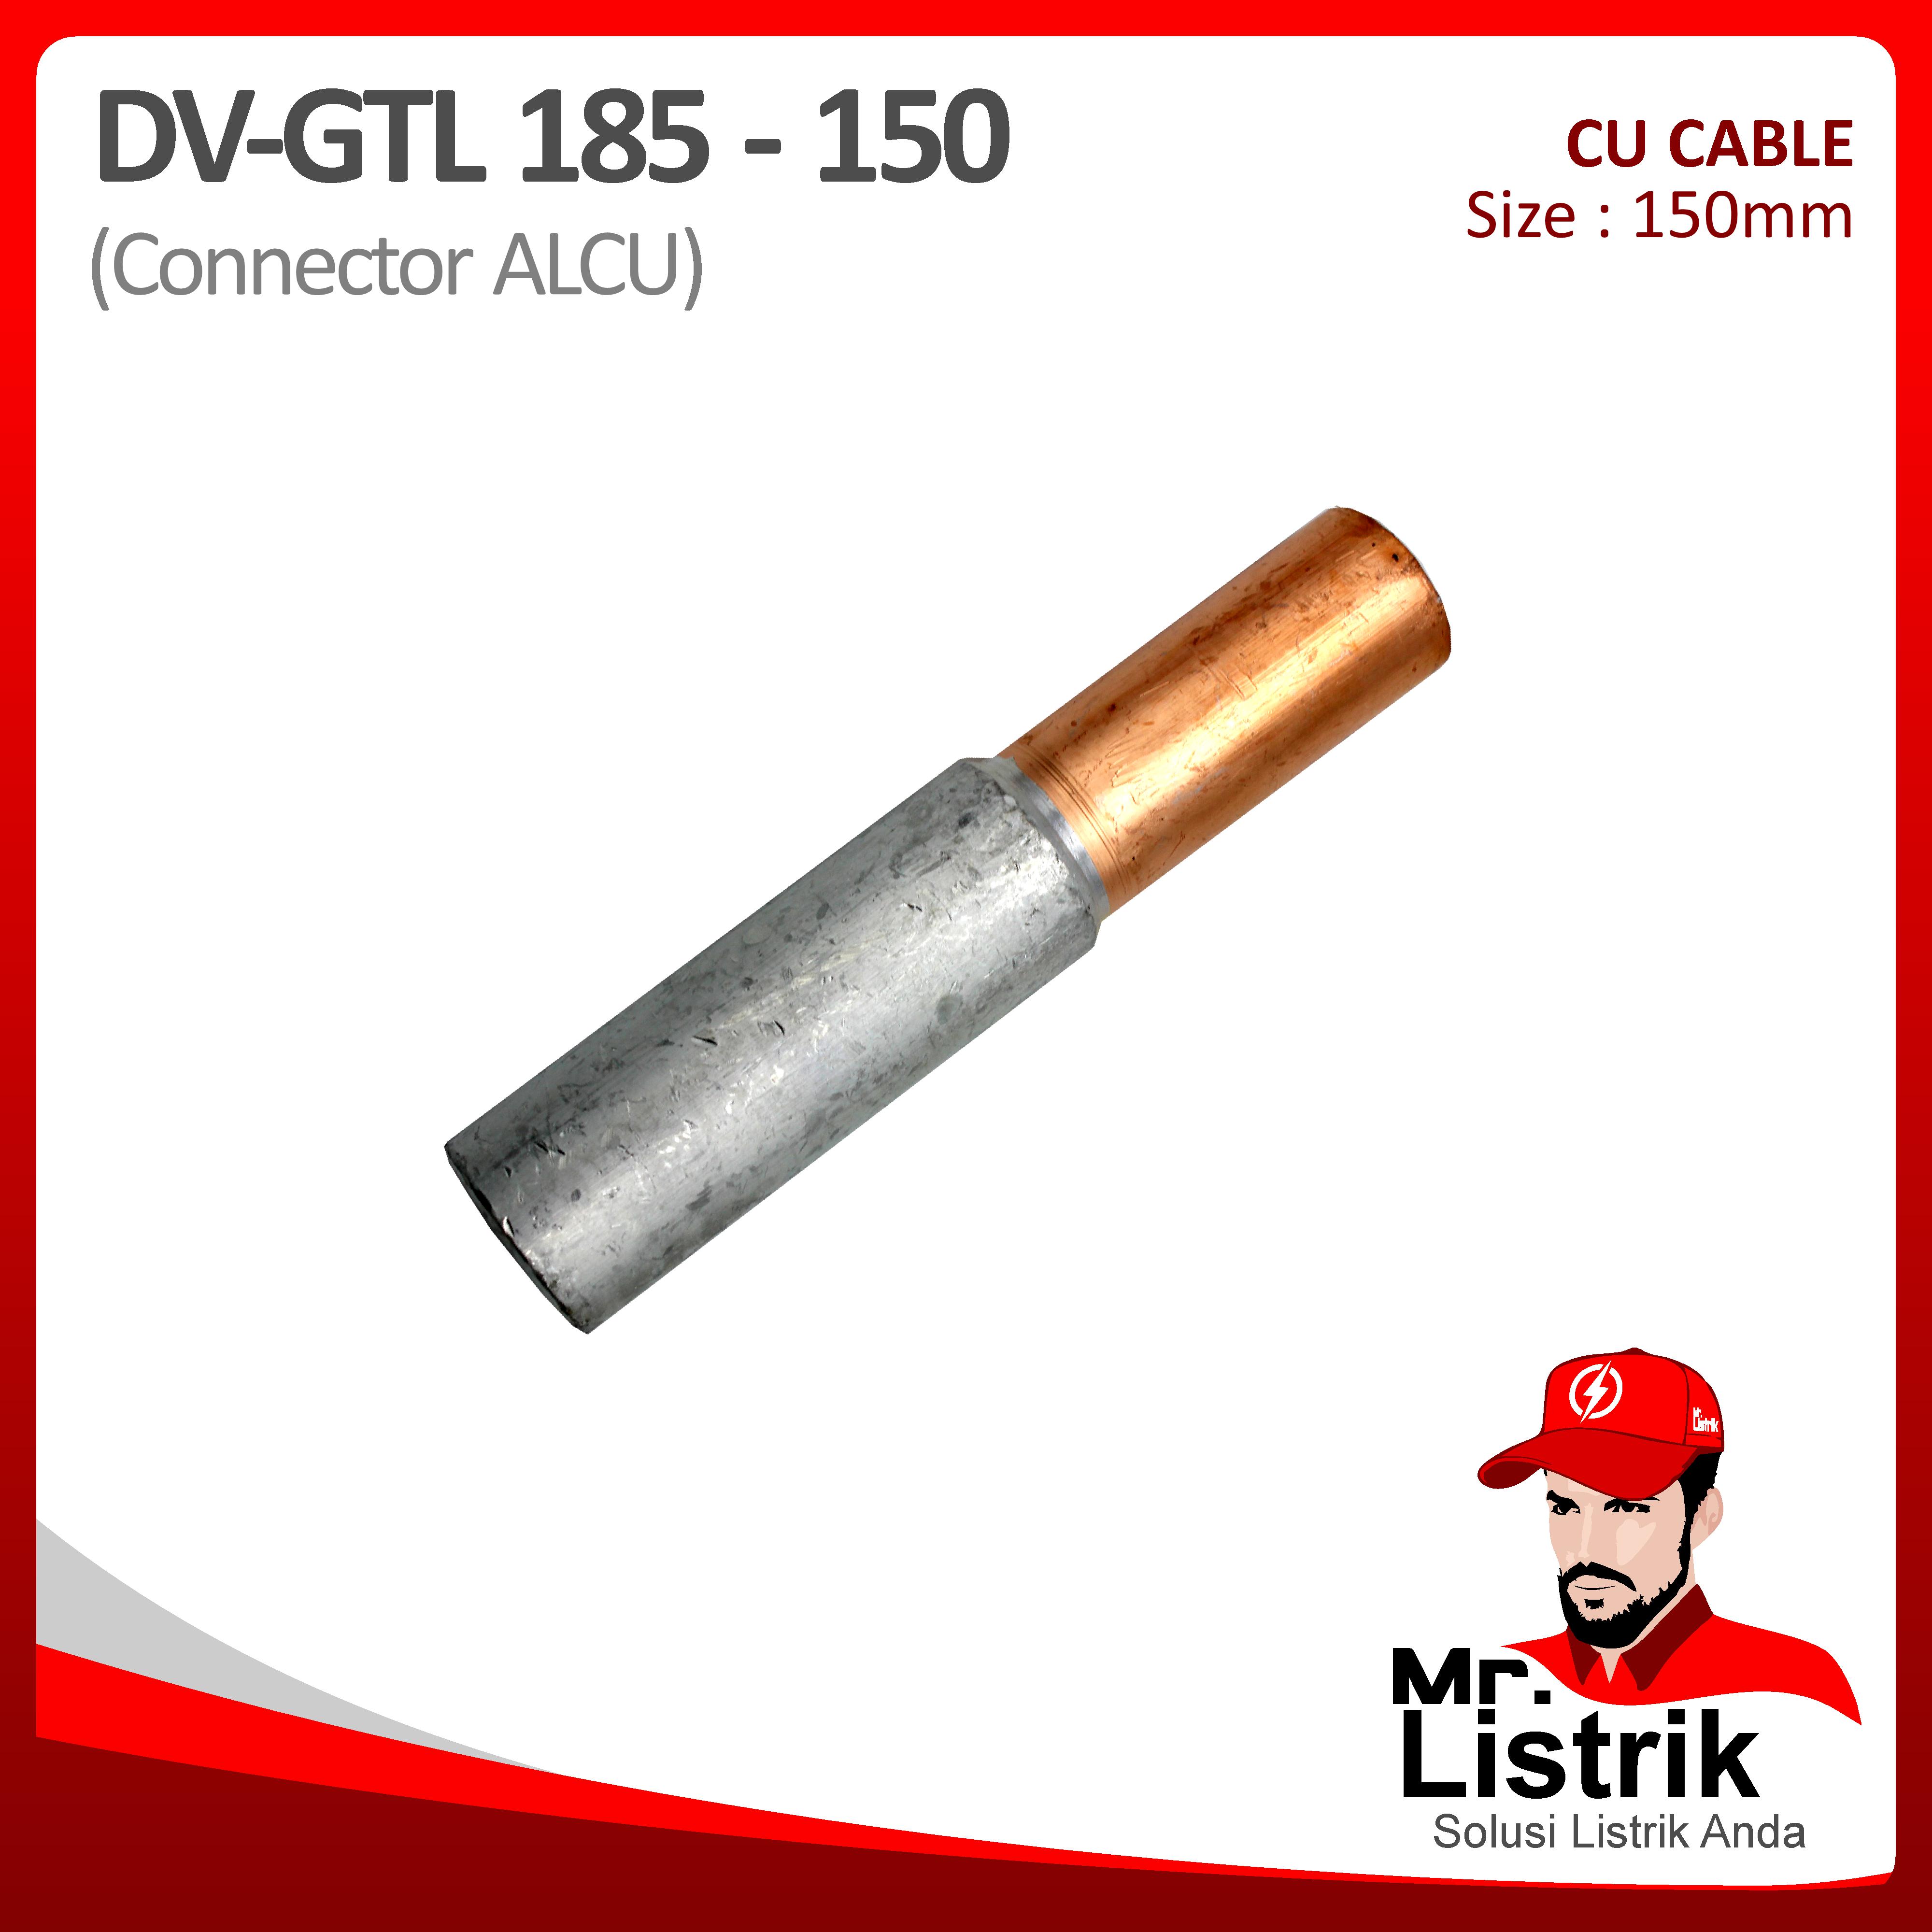 Connector ALCU 185mm DV GTL-185-150